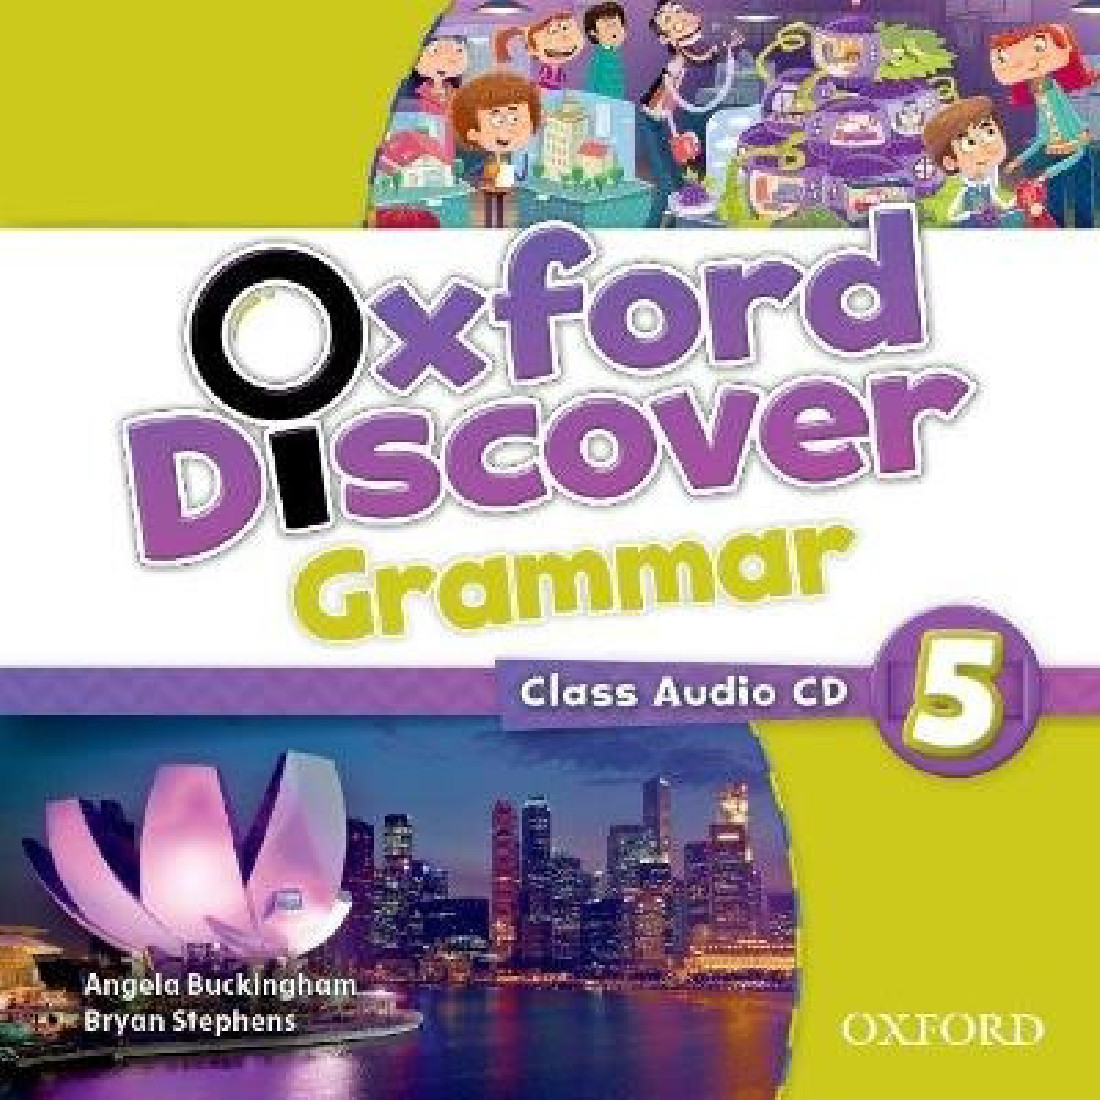 OXFORD DISCOVER GRAMMAR 5 CD CLASS (1)